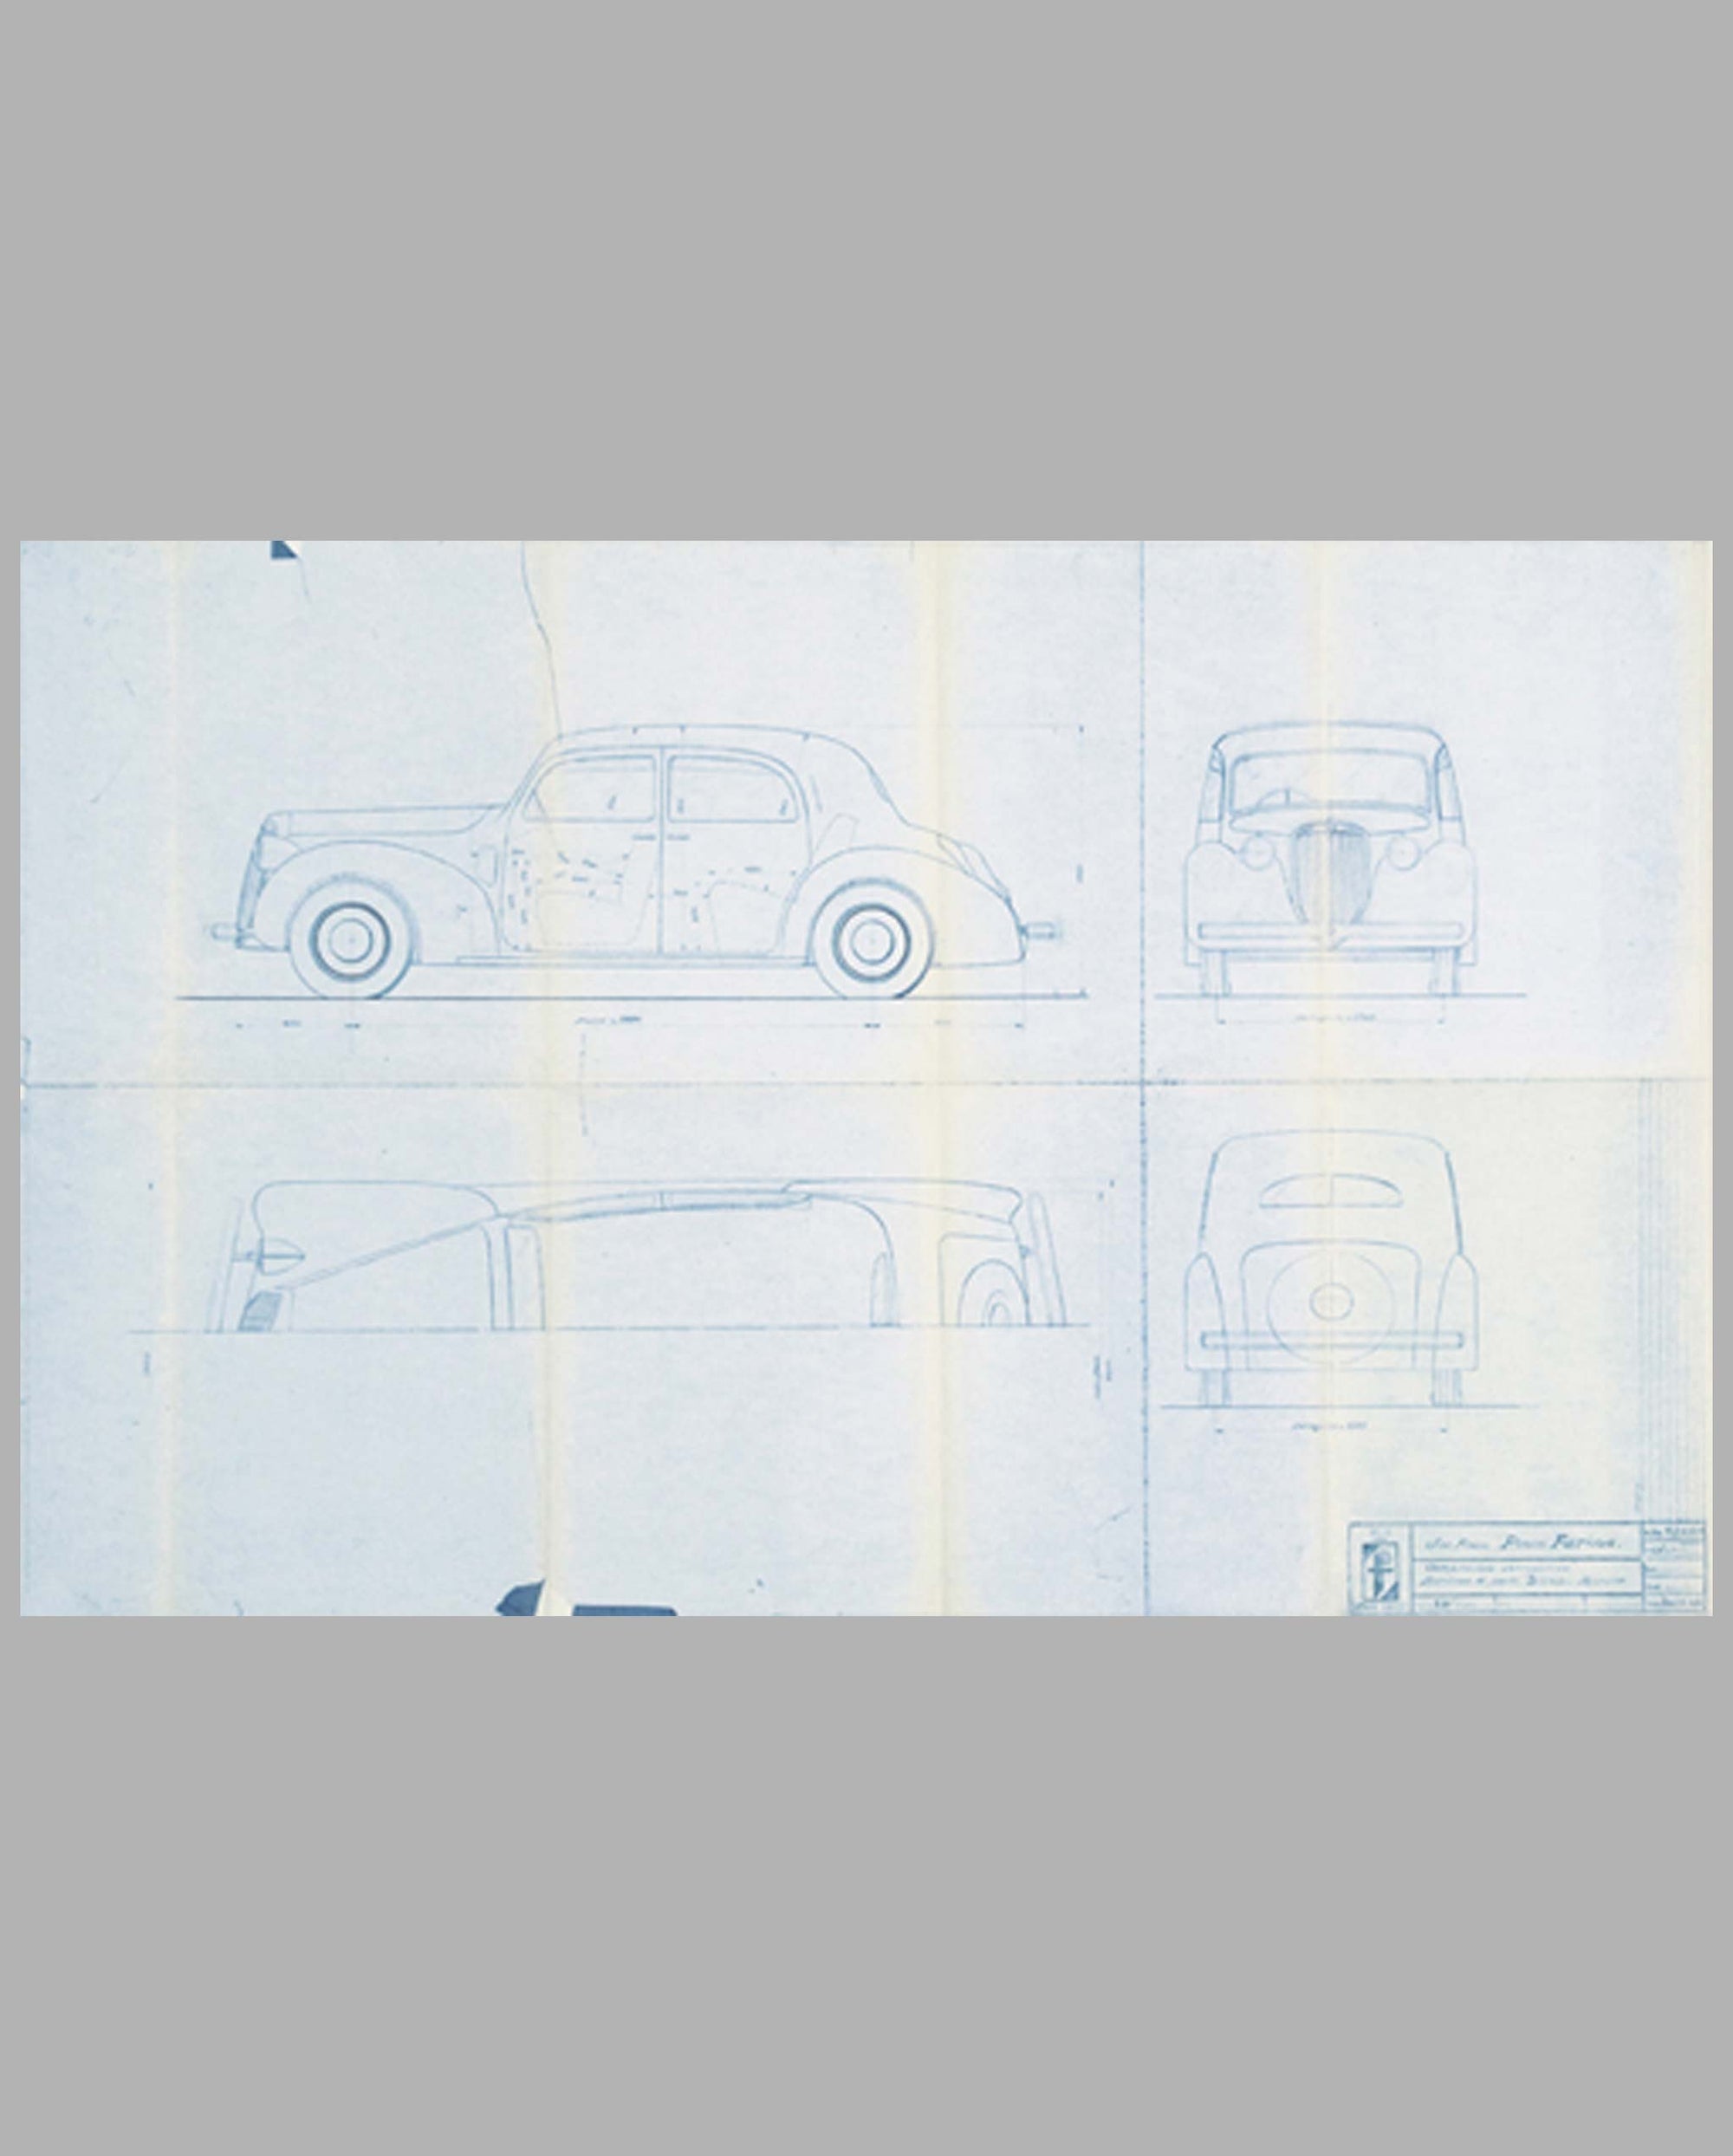 Lancia Berlina “Bilus” Aprilia blueprint from the Pinin Farina studio, late 1945